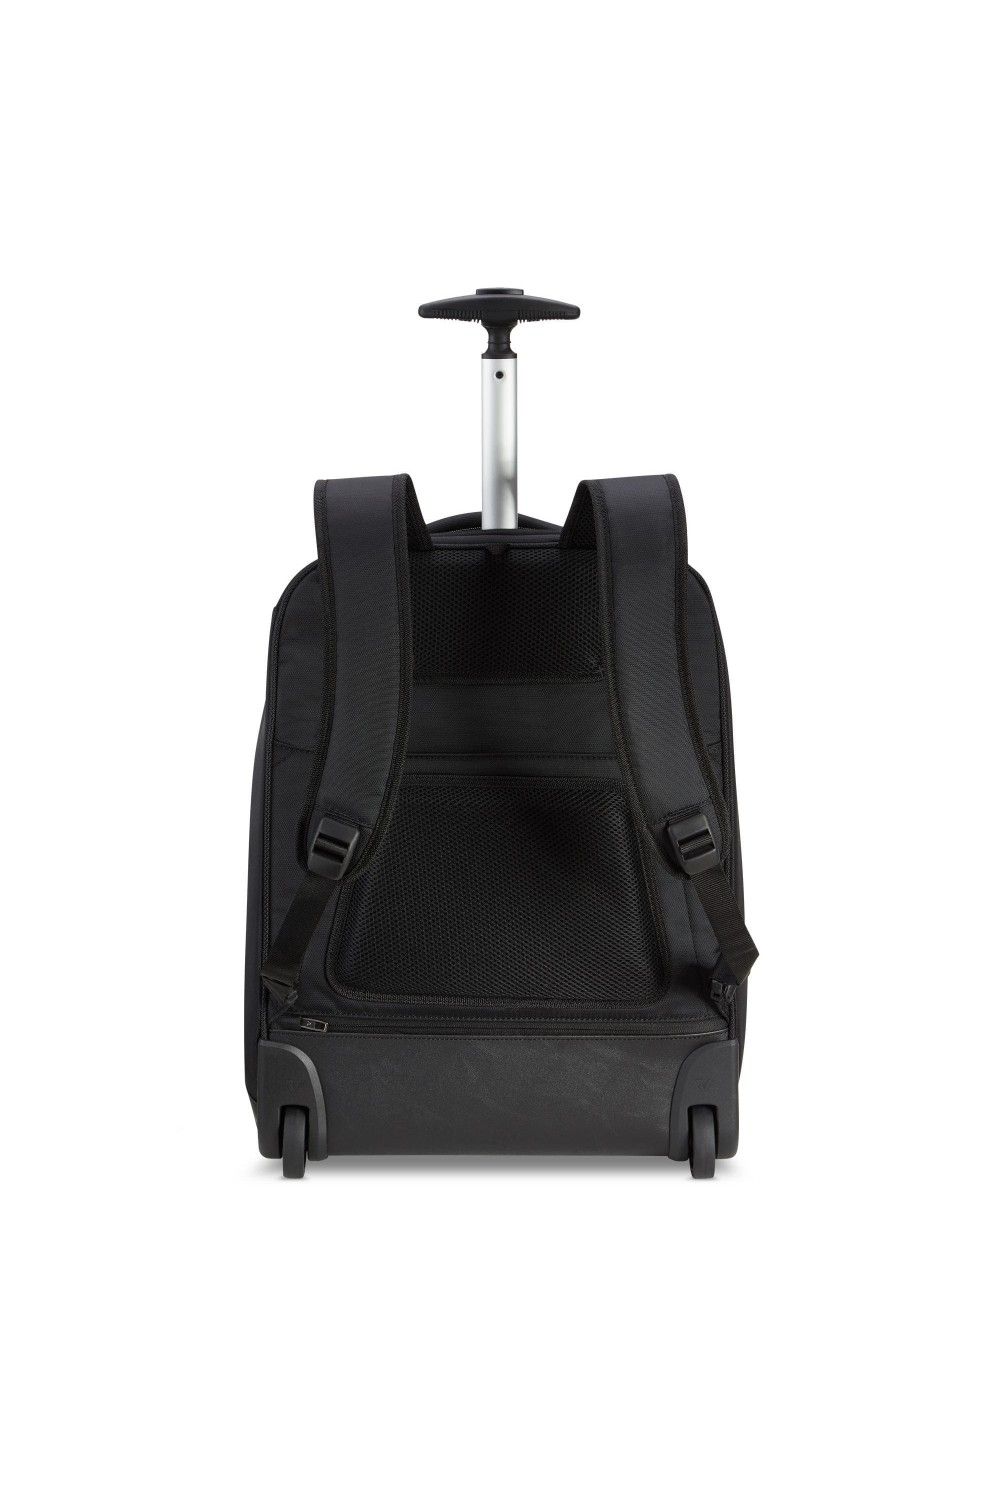 Roncato laptop backpack 2 wheel 15.6 inches Joy